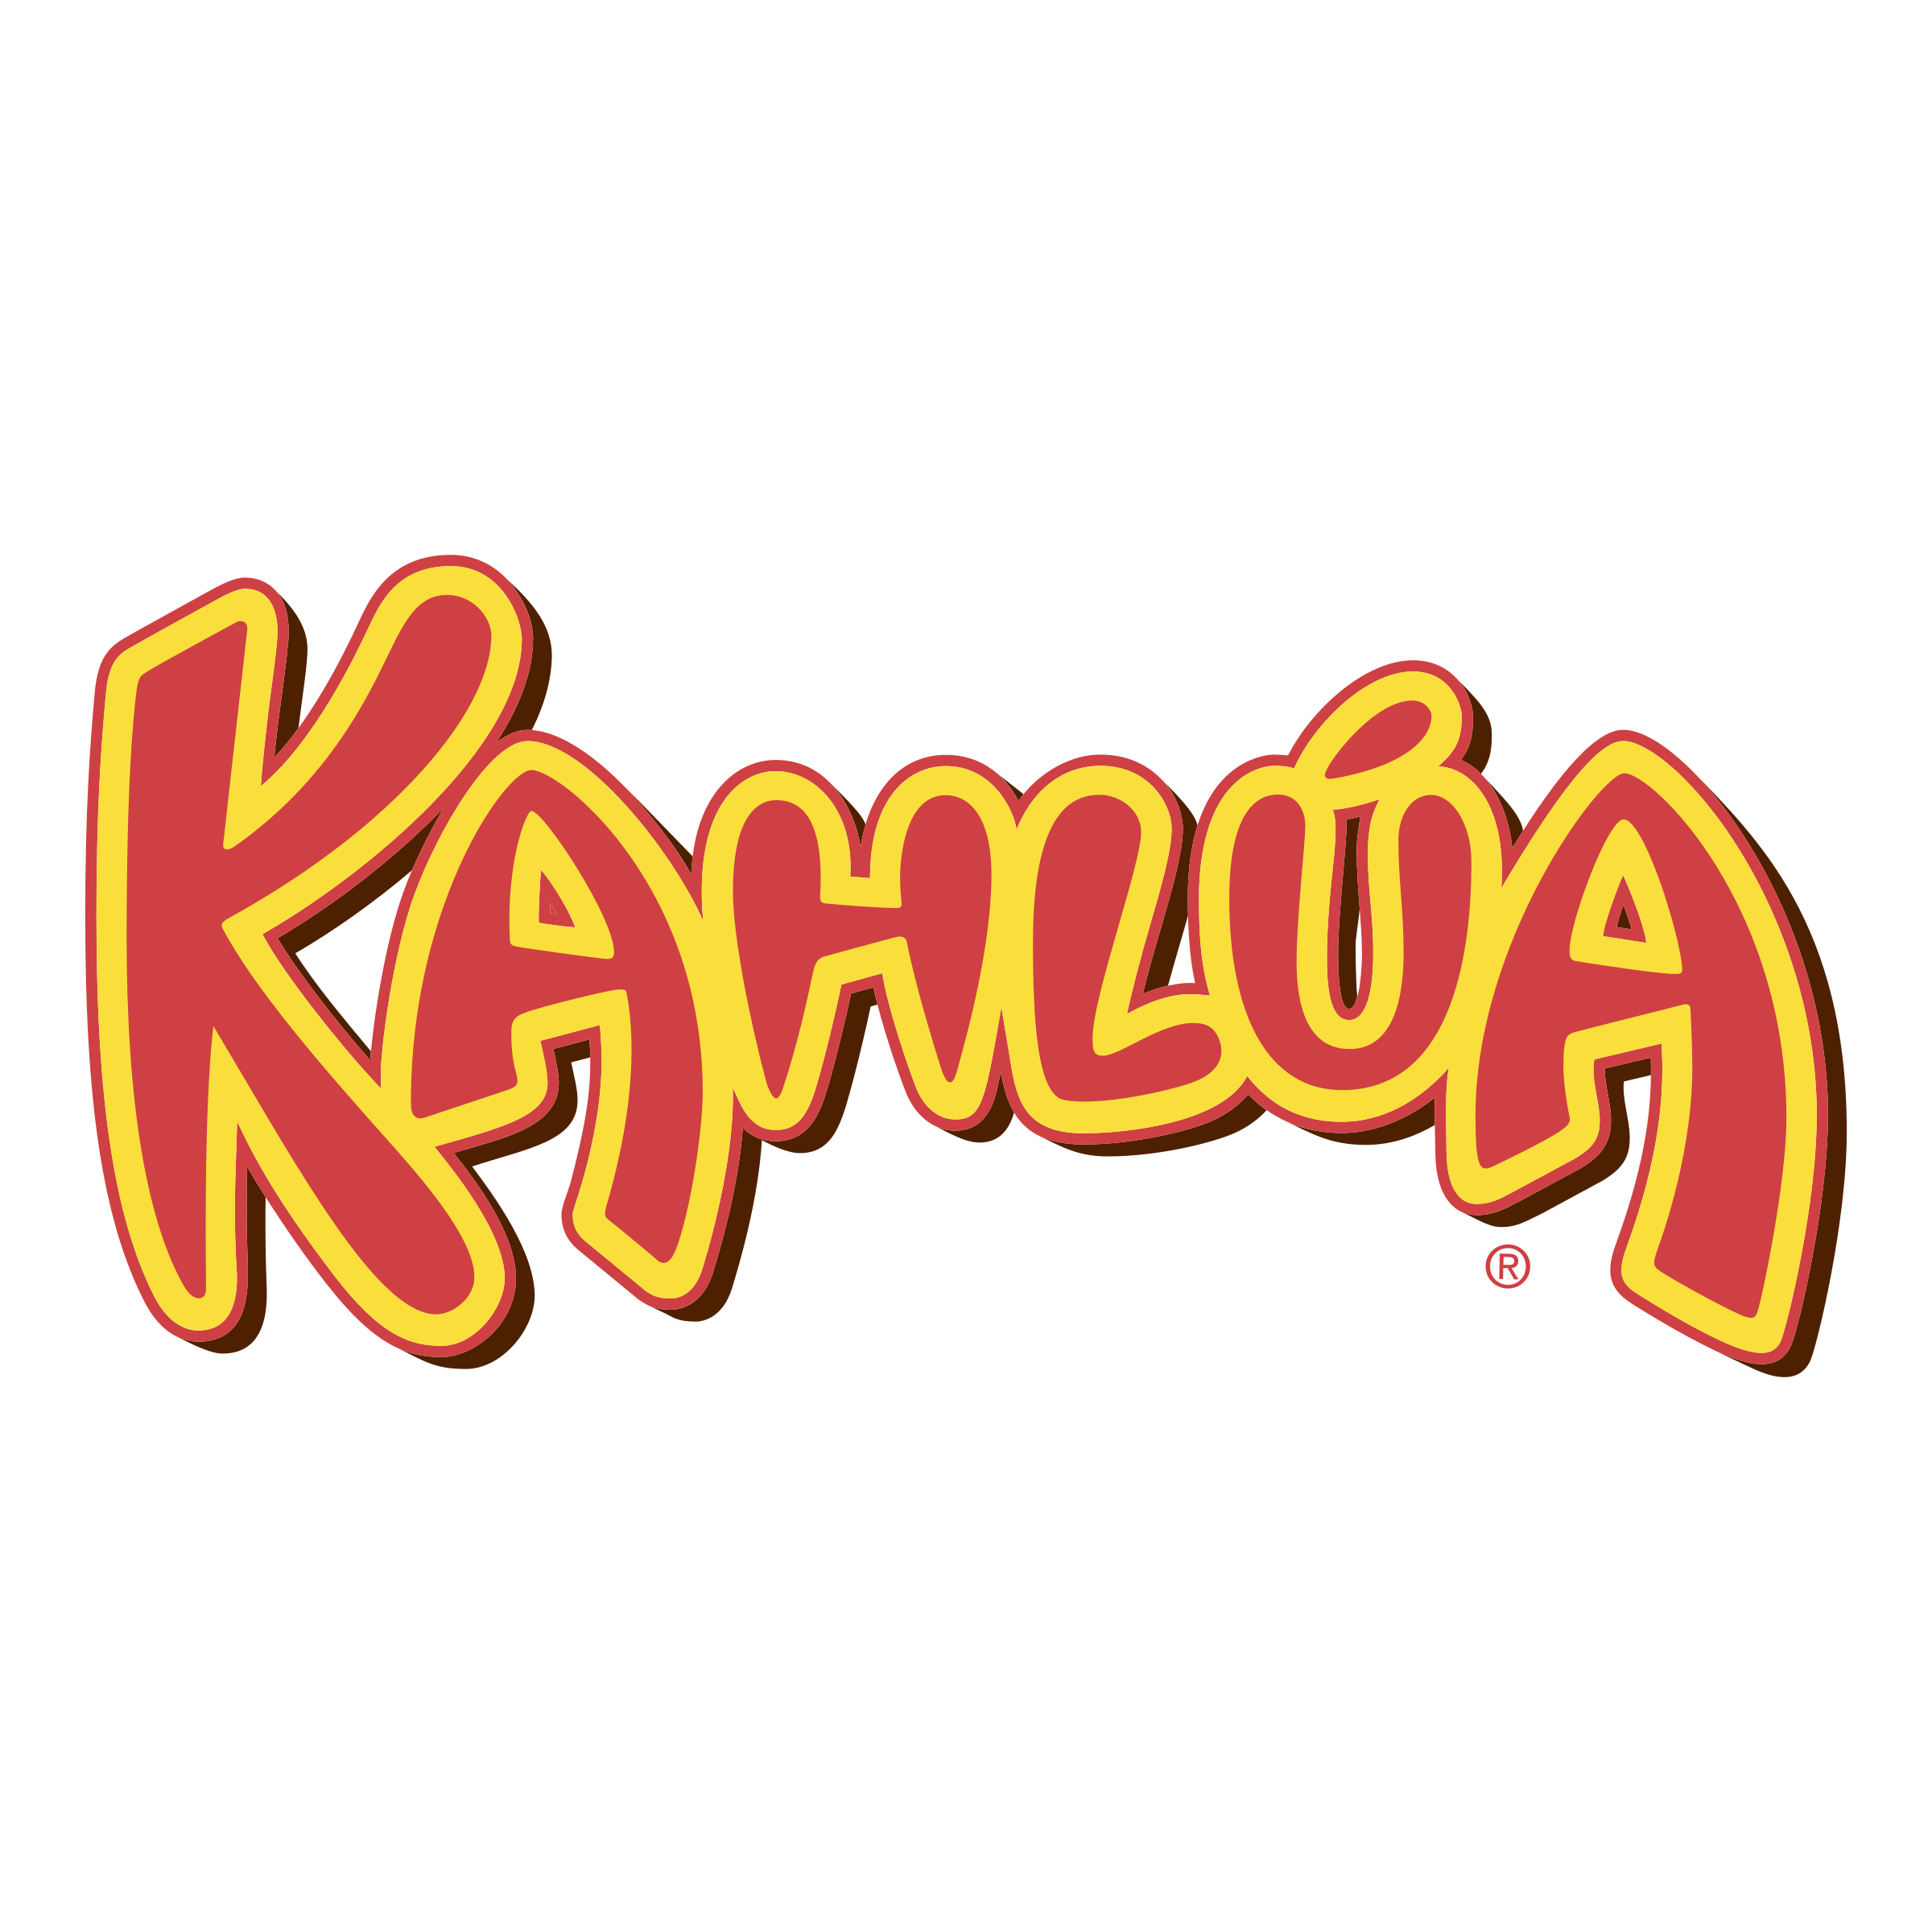 kahlua-1-logo-png-transparent.png